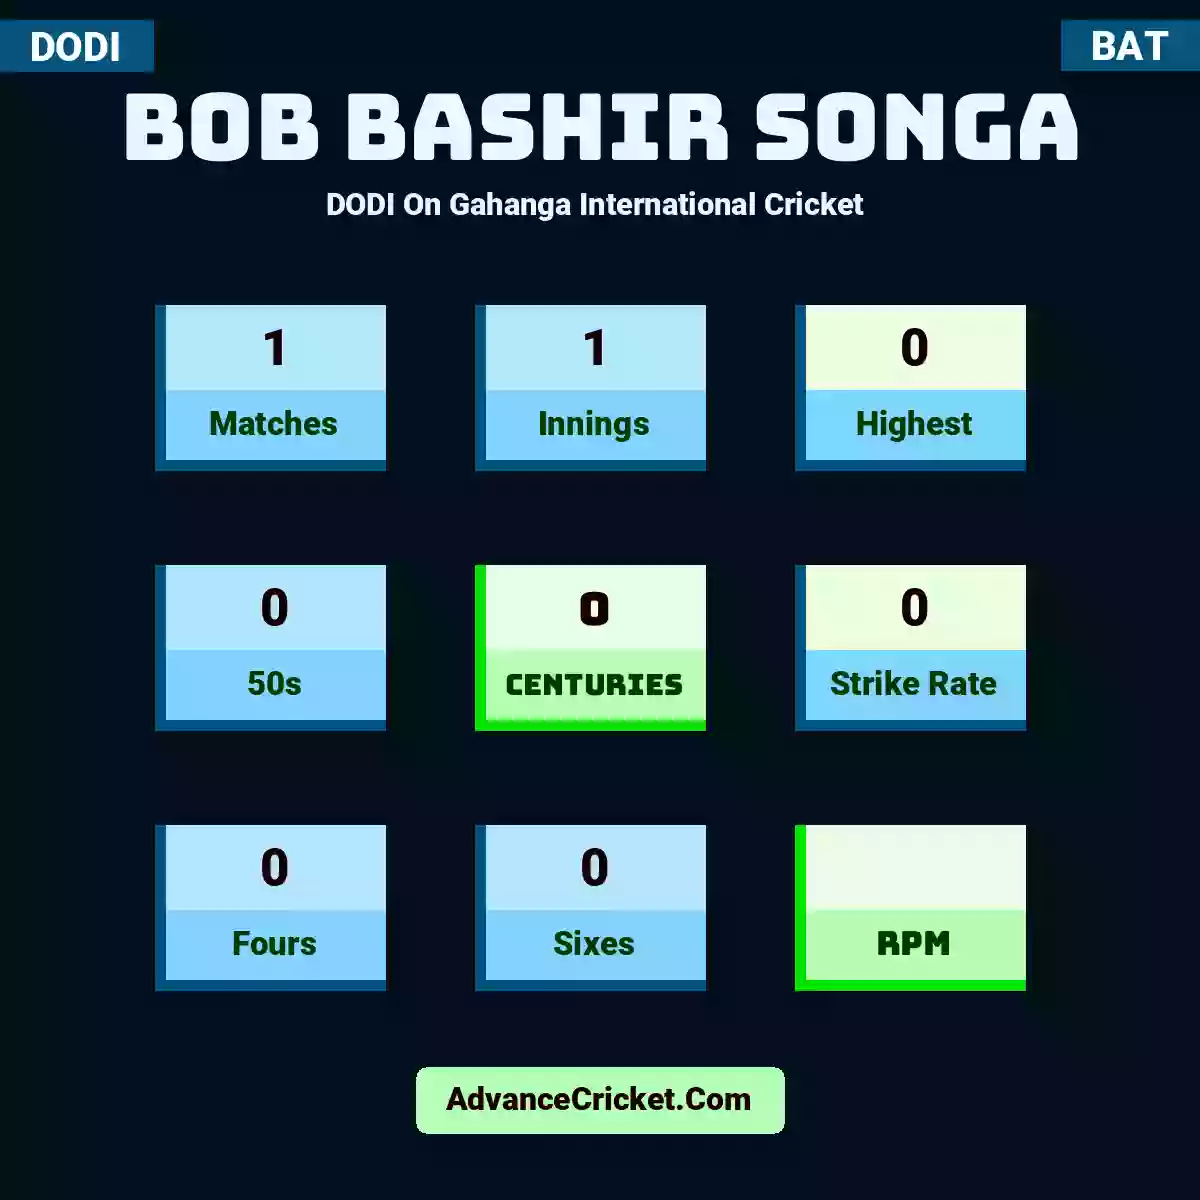 Bob Bashir Songa DODI  On Gahanga International Cricket , Bob Bashir Songa played 1 matches, scored 0 runs as highest, 0 half-centuries, and 0 centuries, with a strike rate of 0. B.Bashir.Songa hit 0 fours and 0 sixes.